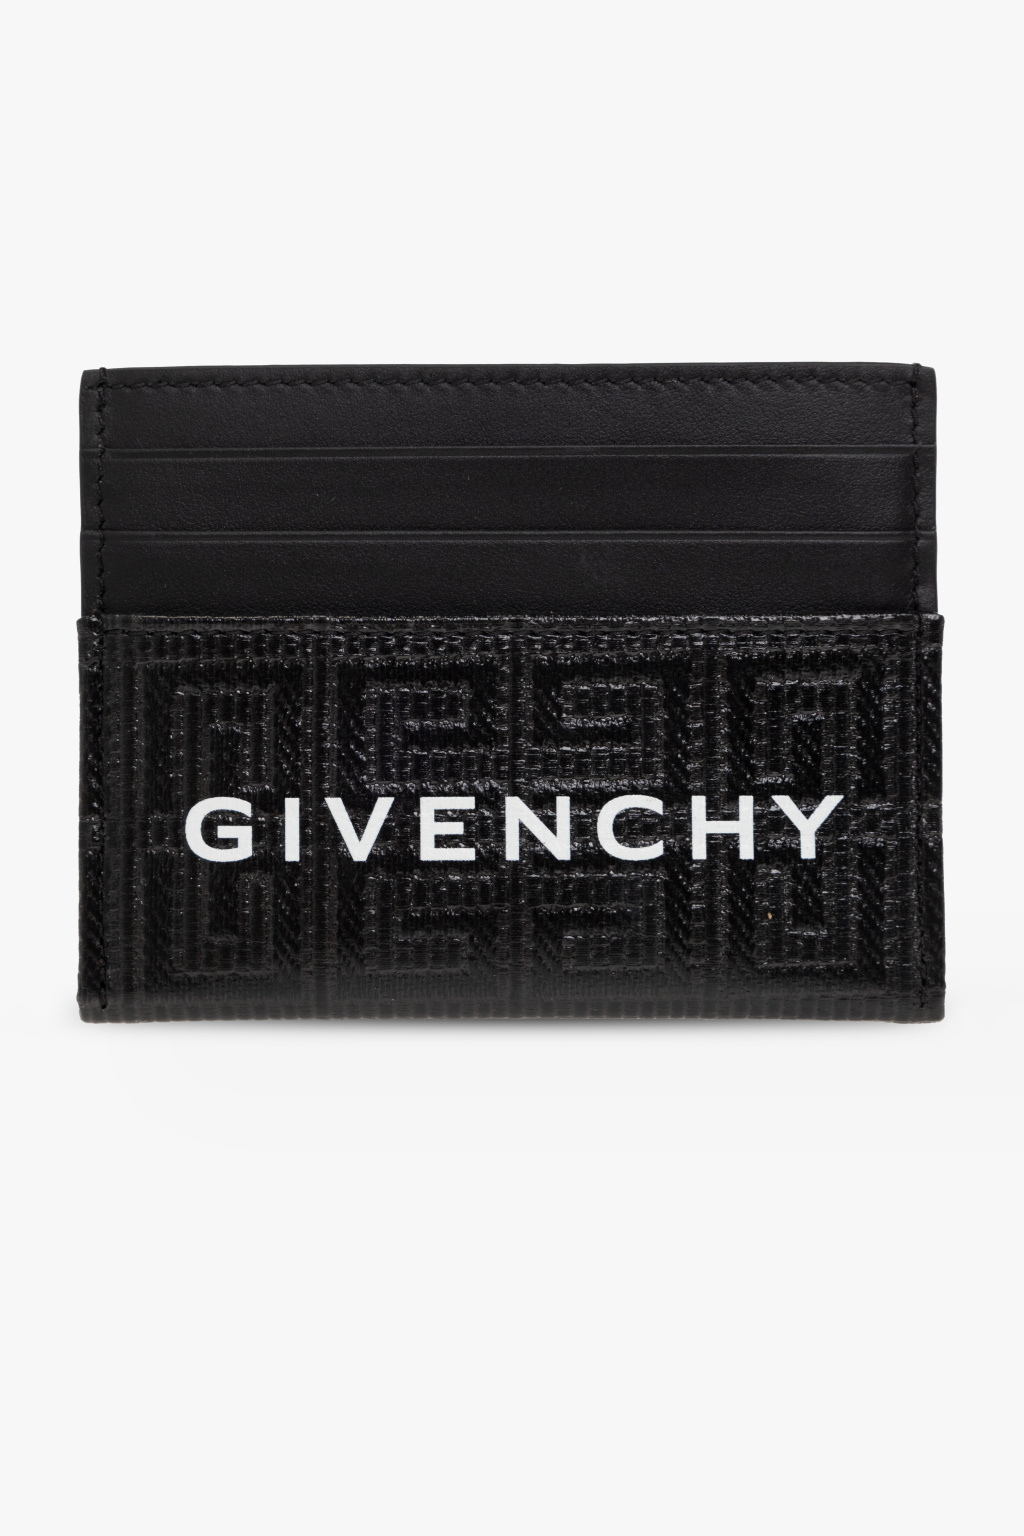 Givenchy givenchy paris leo signature black hoodie